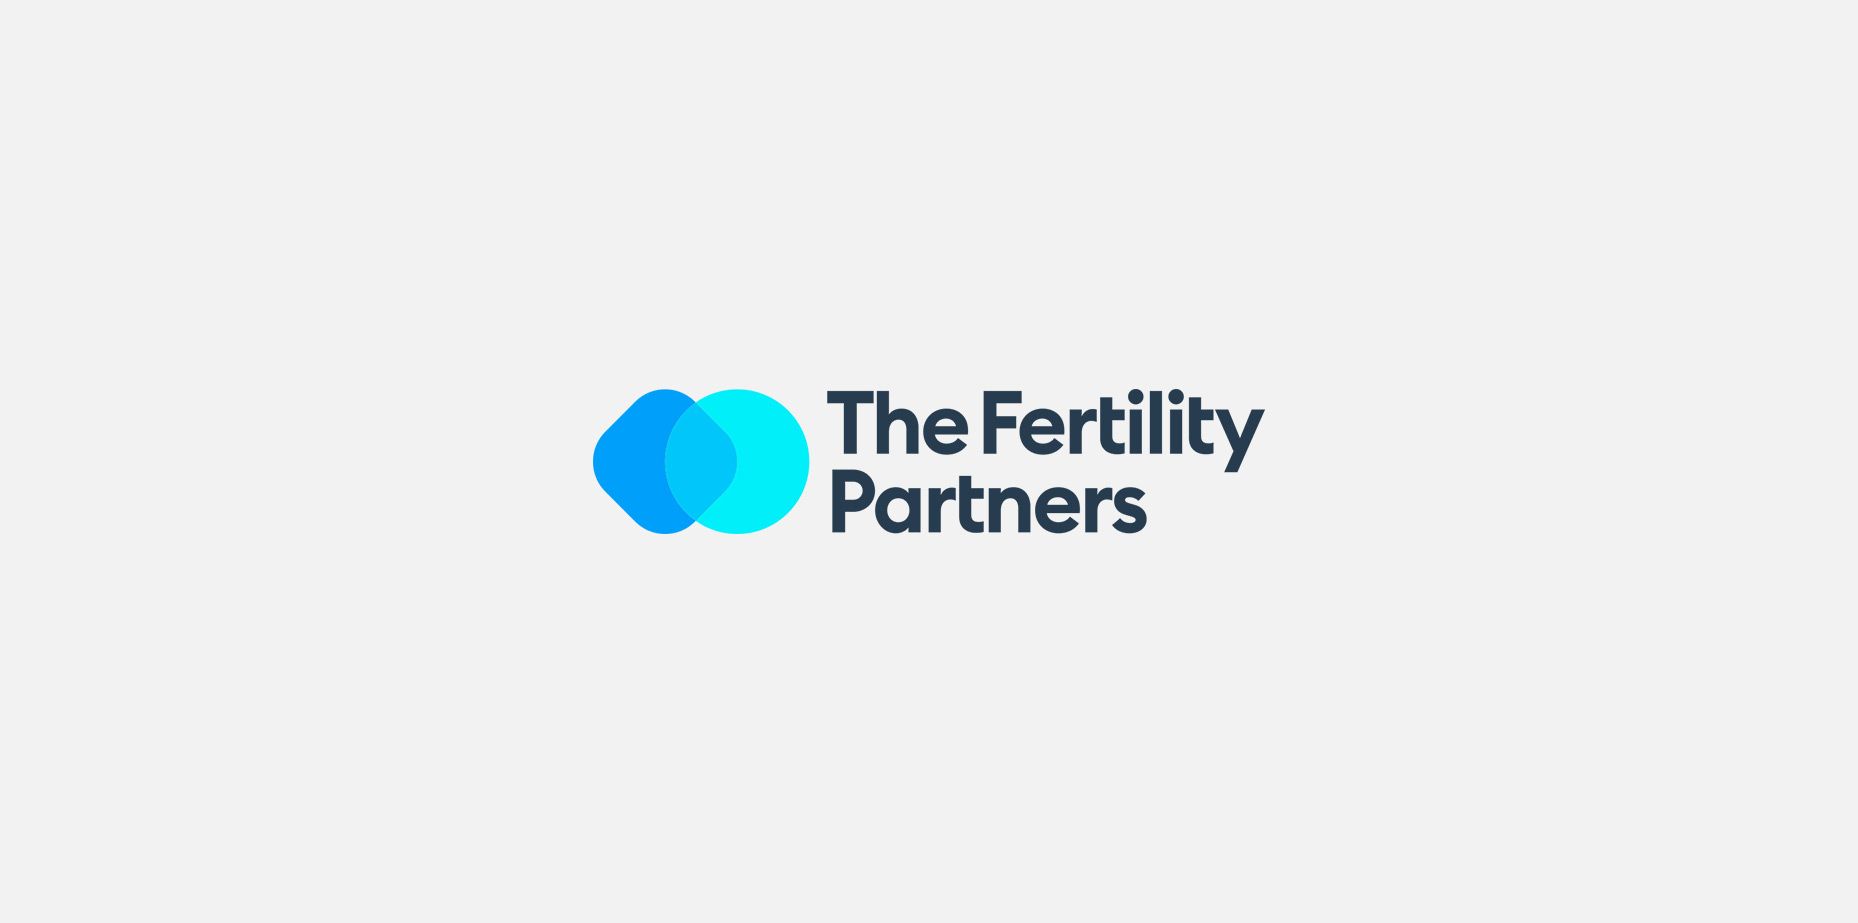 The Fertility Partners